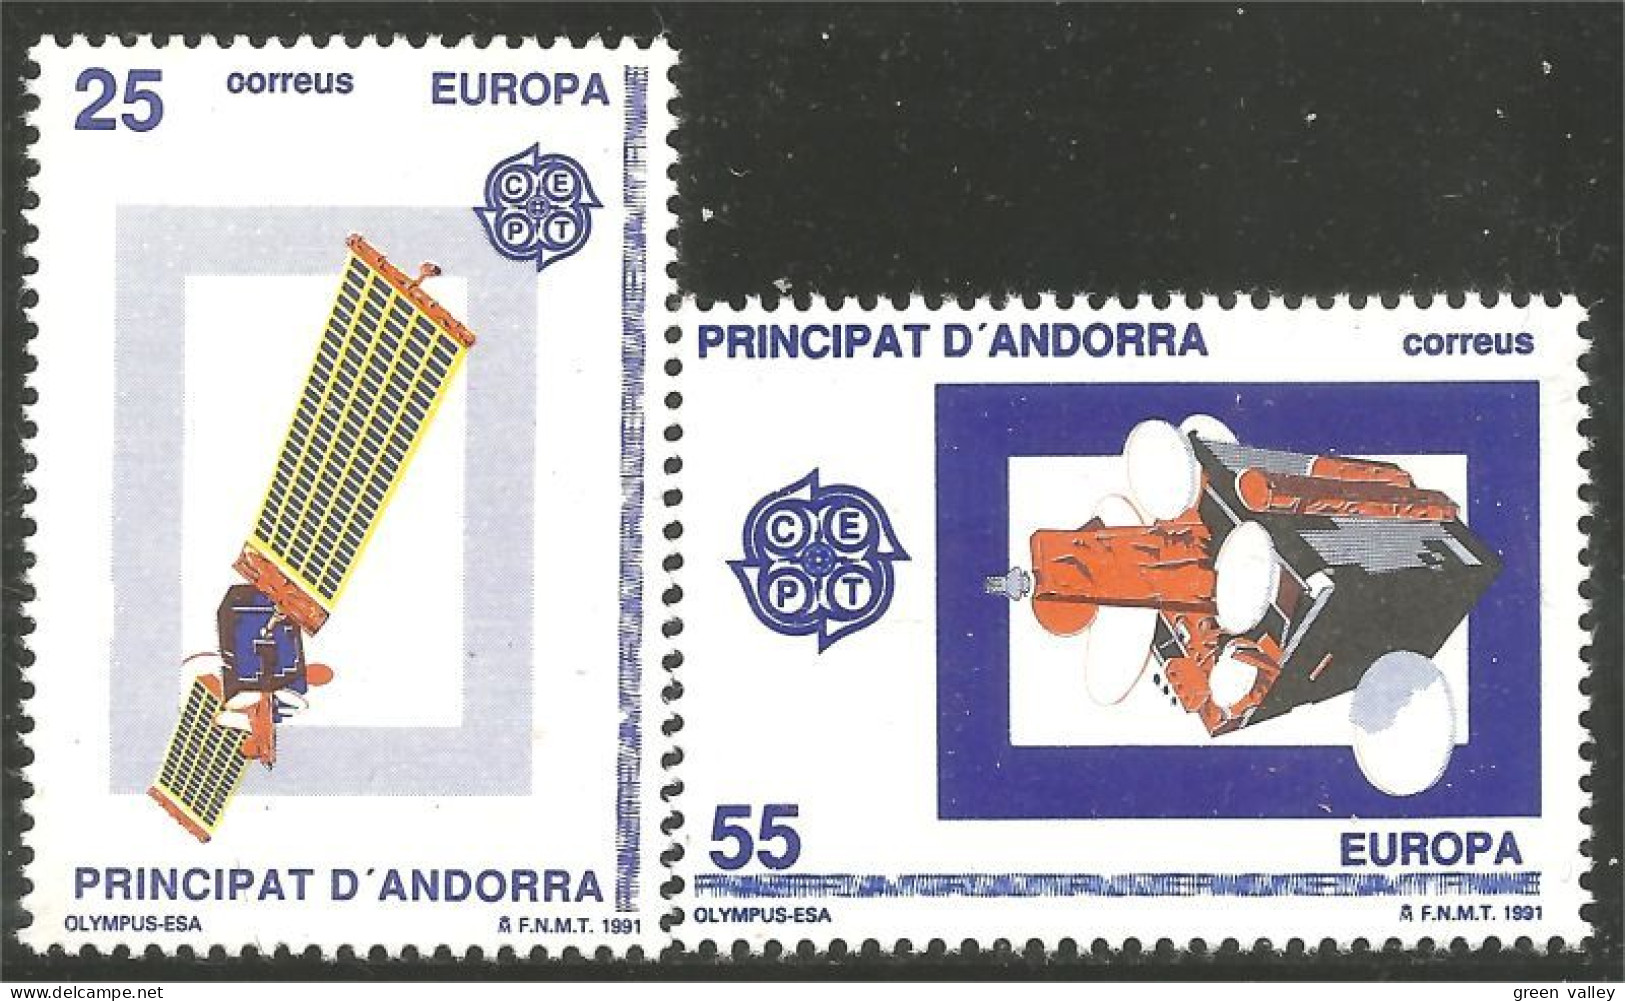 EU91-2 EUROPA-CEPT 1991 Andorre Espace Space Communication Satellite MNH ** Neuf SC - 1990